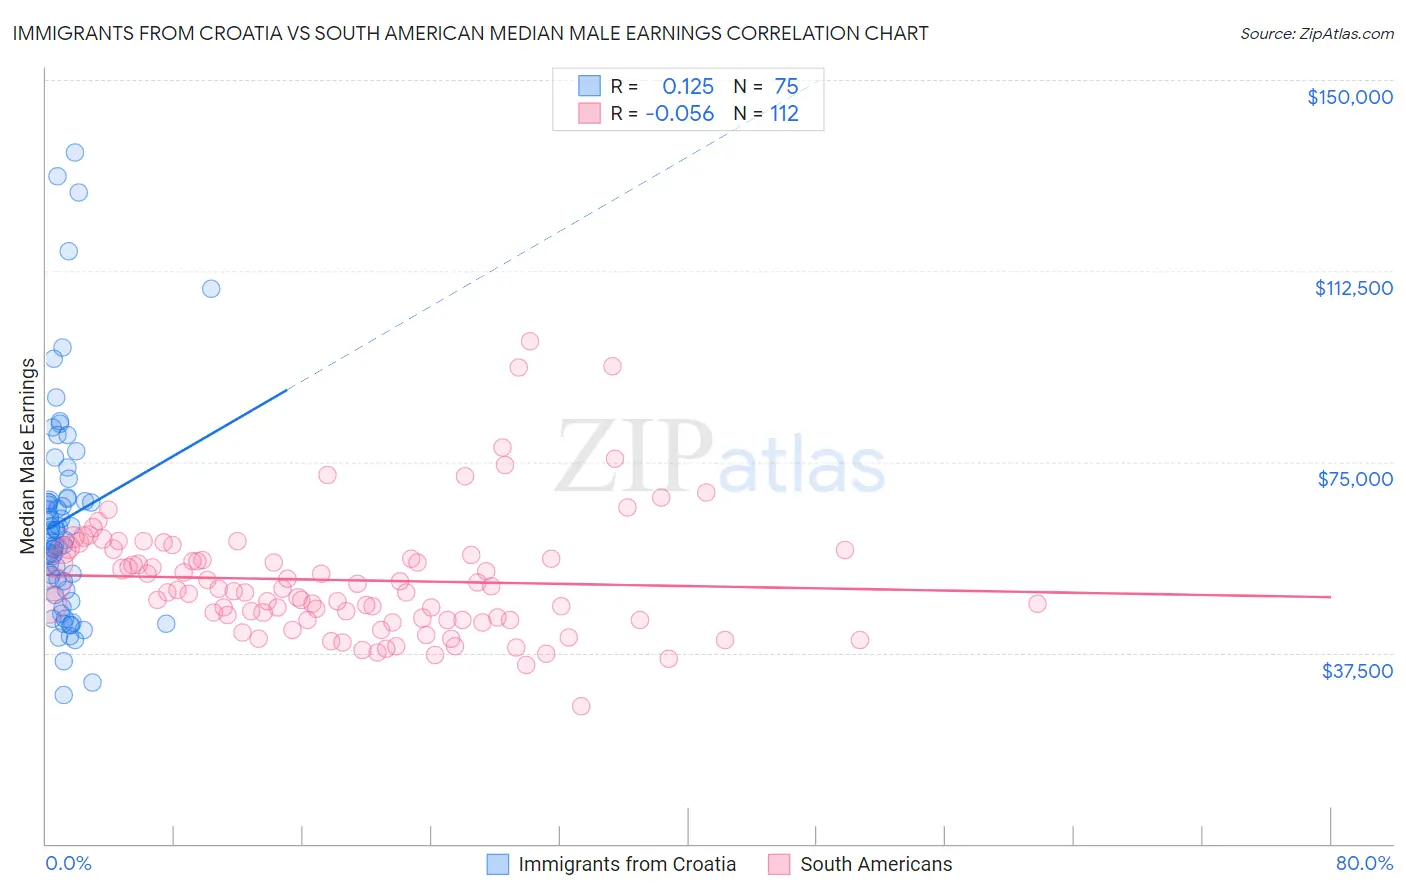 Immigrants from Croatia vs South American Median Male Earnings